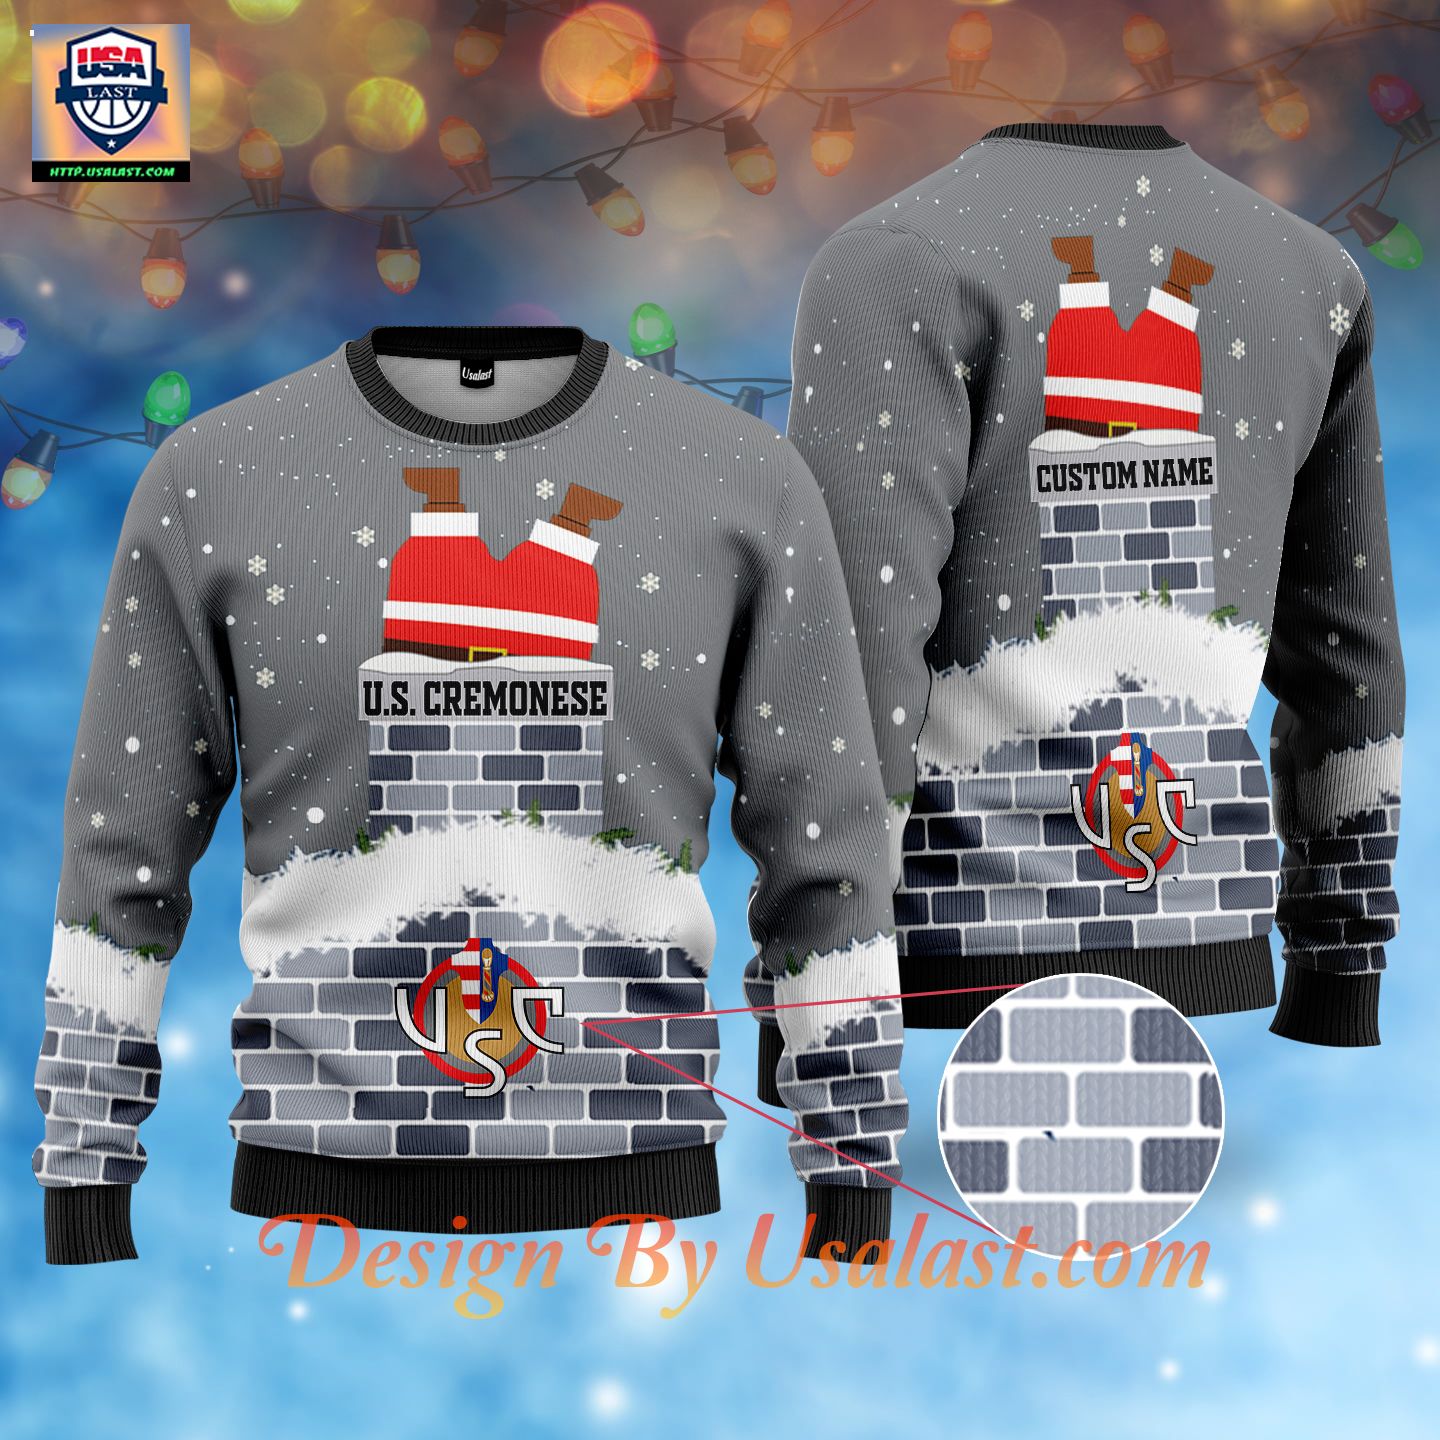 U.S Cremonese Santa Claus Custom Name Ugly Christmas Sweater – Usalast